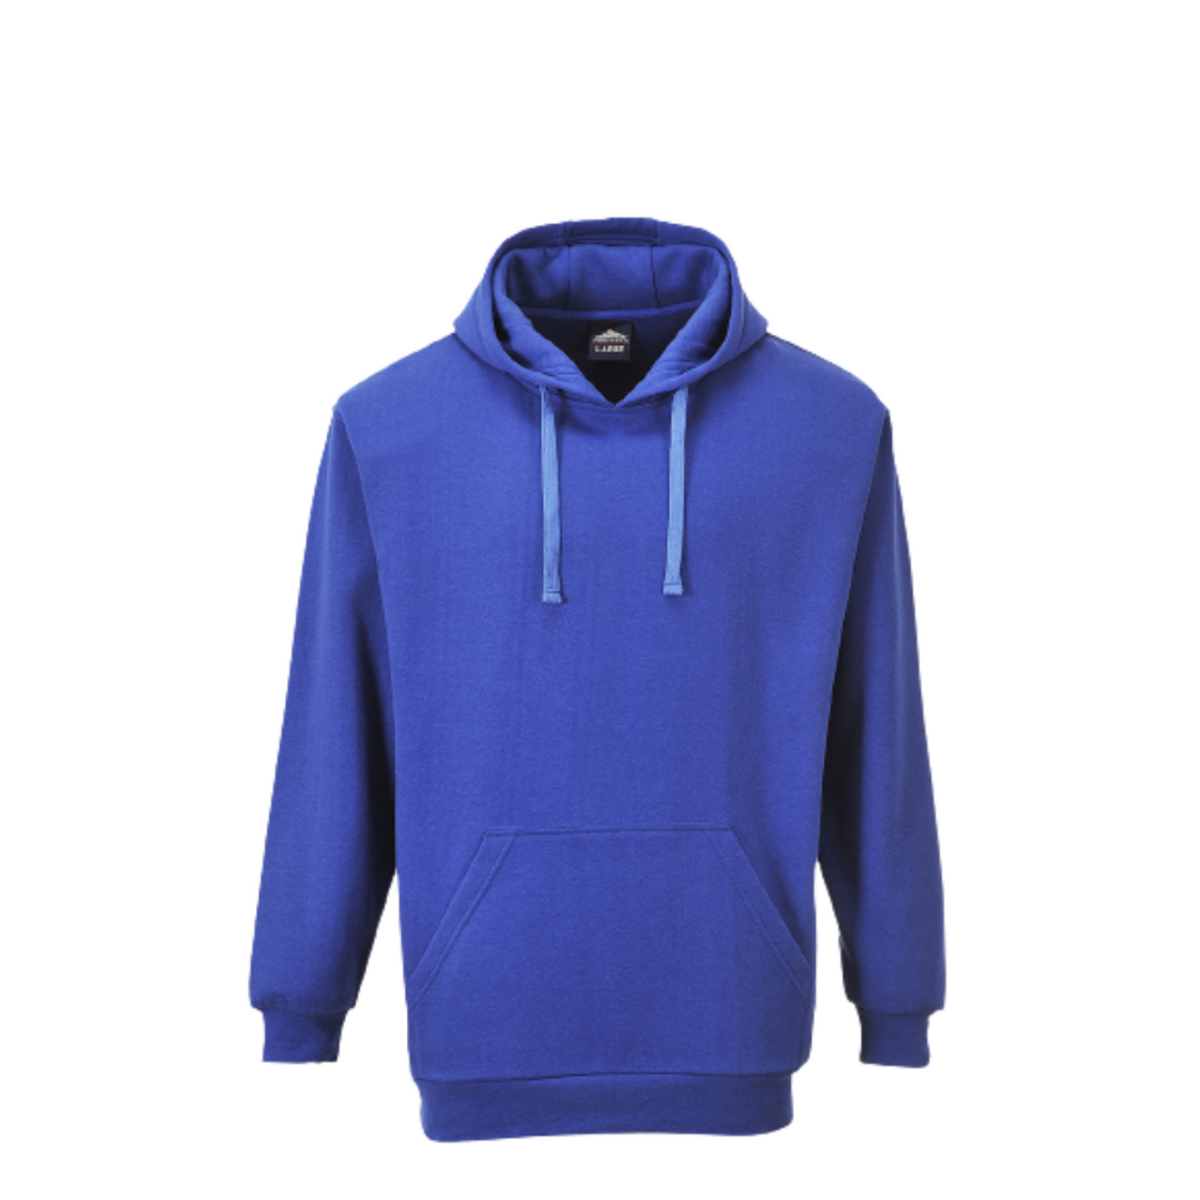 Portwest Roma Hoody Soft Blue Sweatshirt Drawstring Hooded Long Sleeve B302-Collins Clothing Co